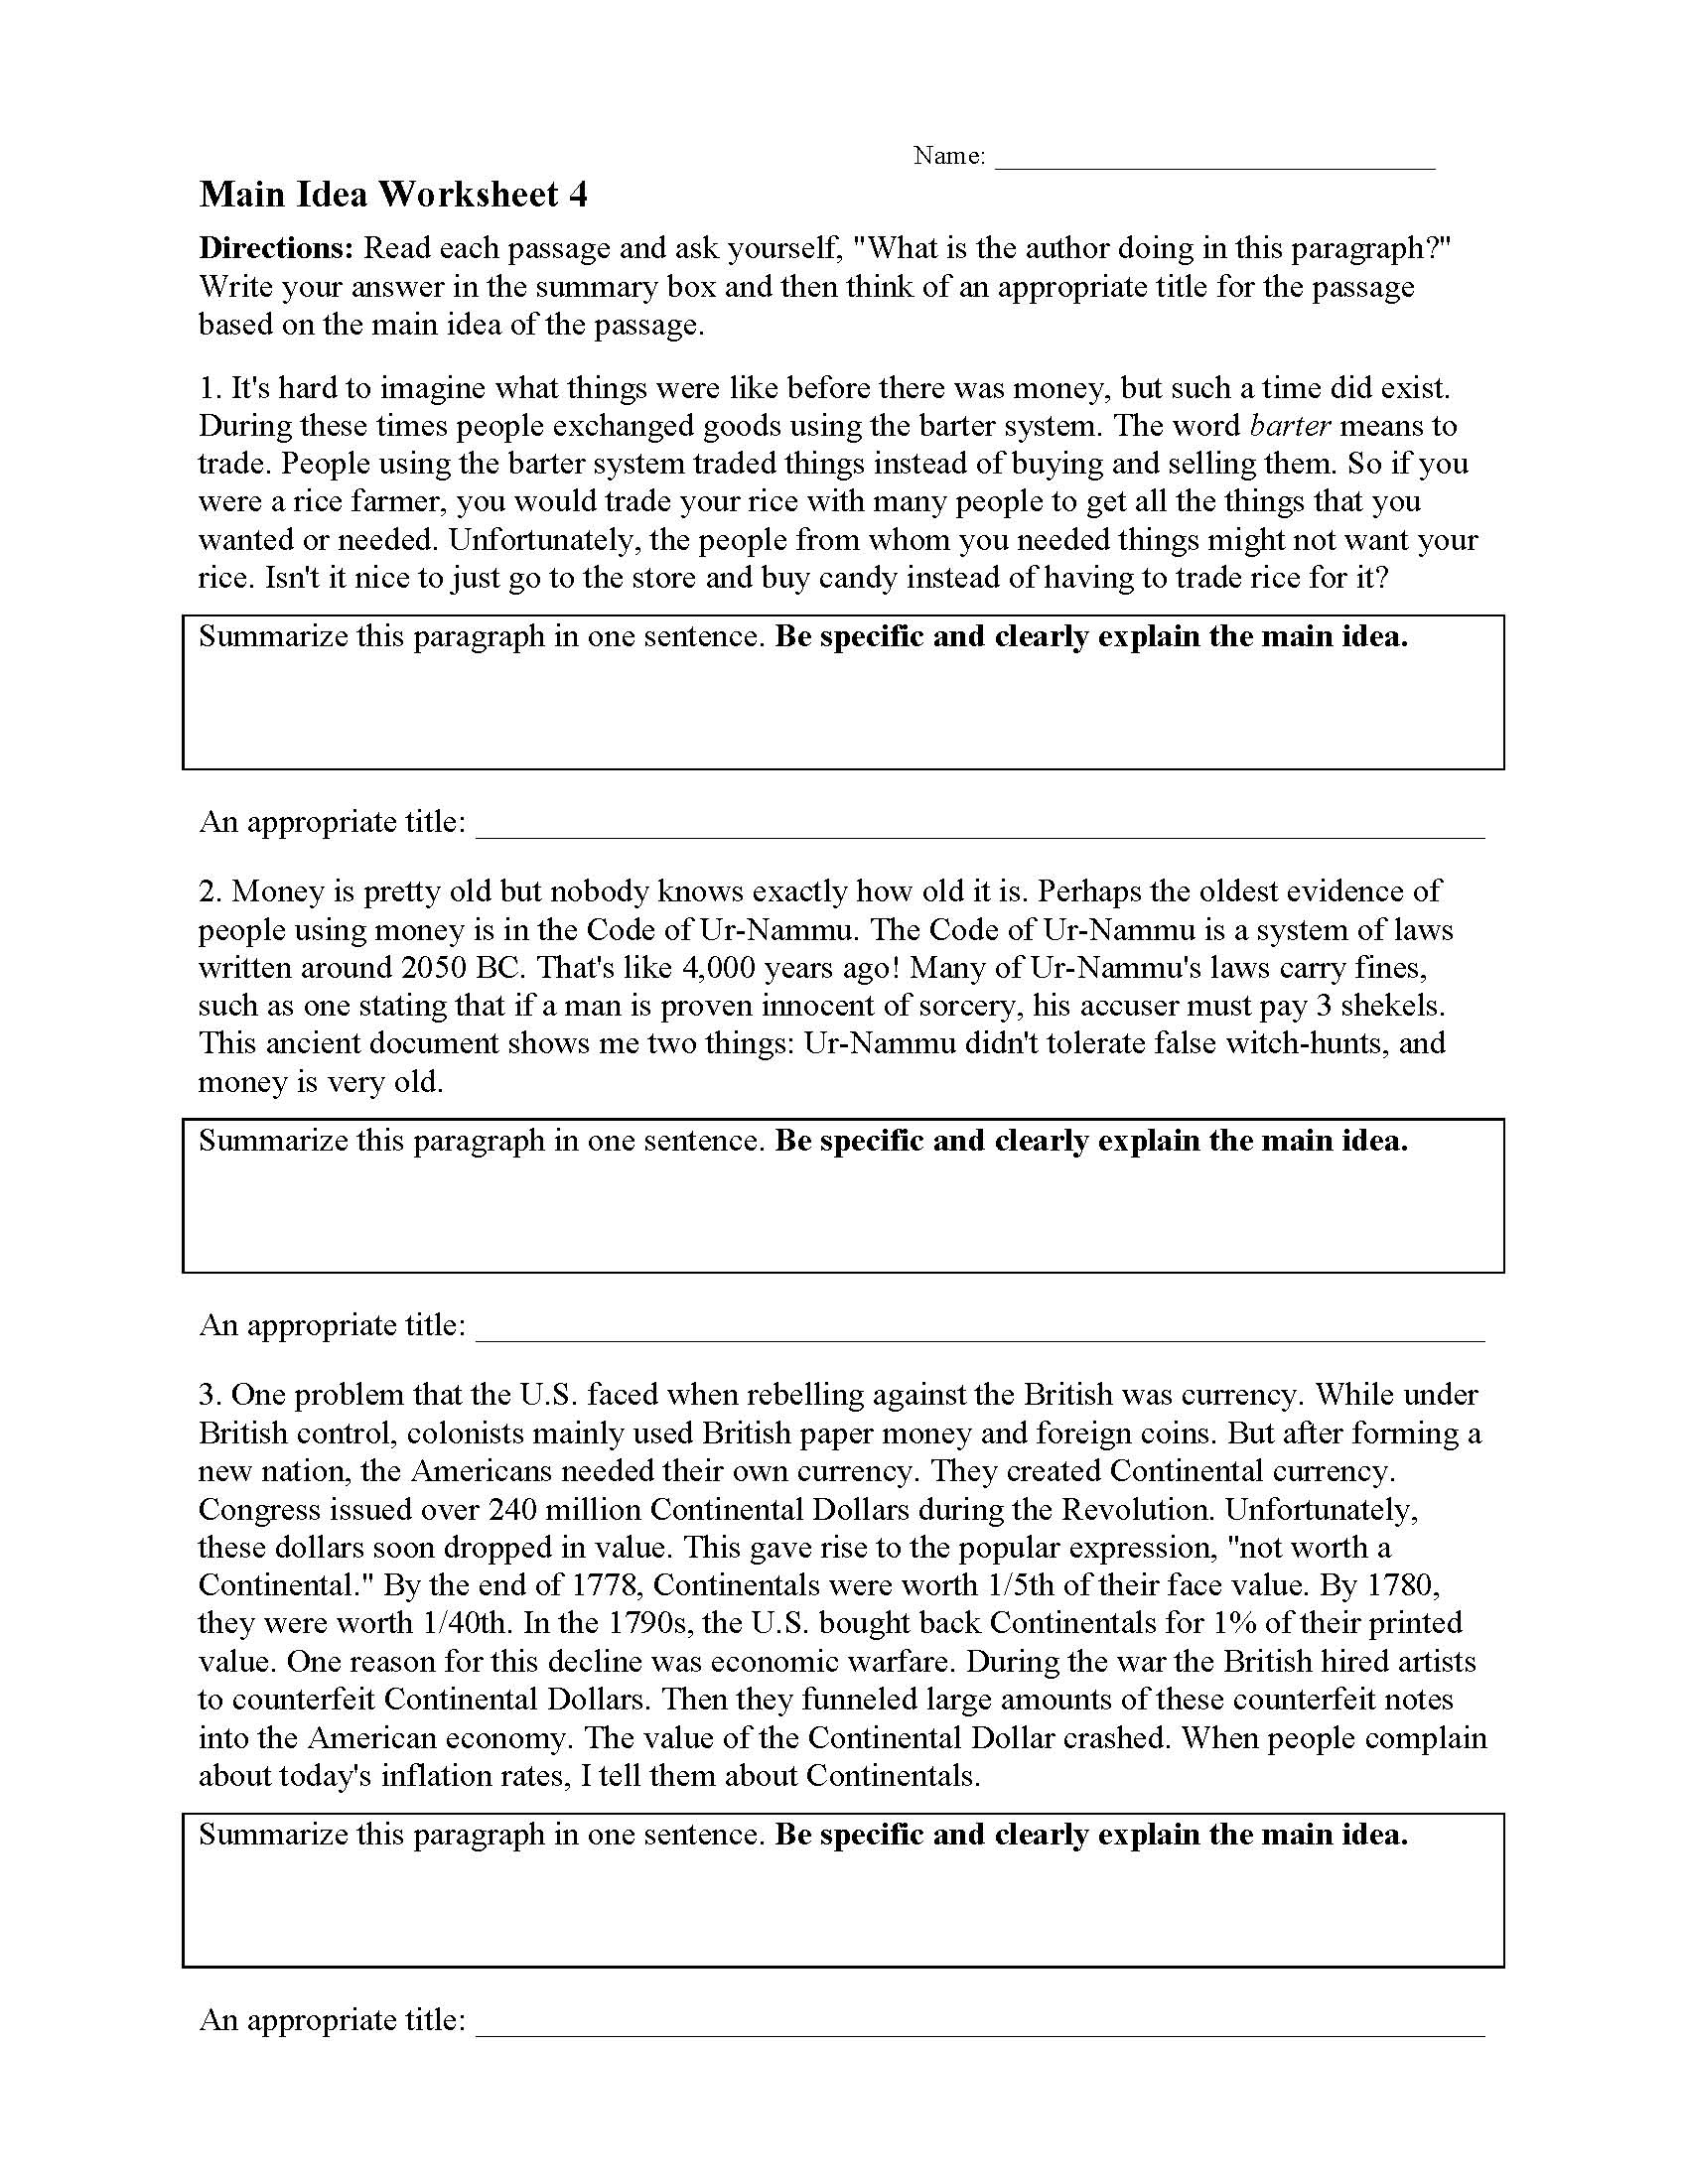 Main Idea Worksheet 21  Reading Activity Regarding Main Idea Worksheet 4